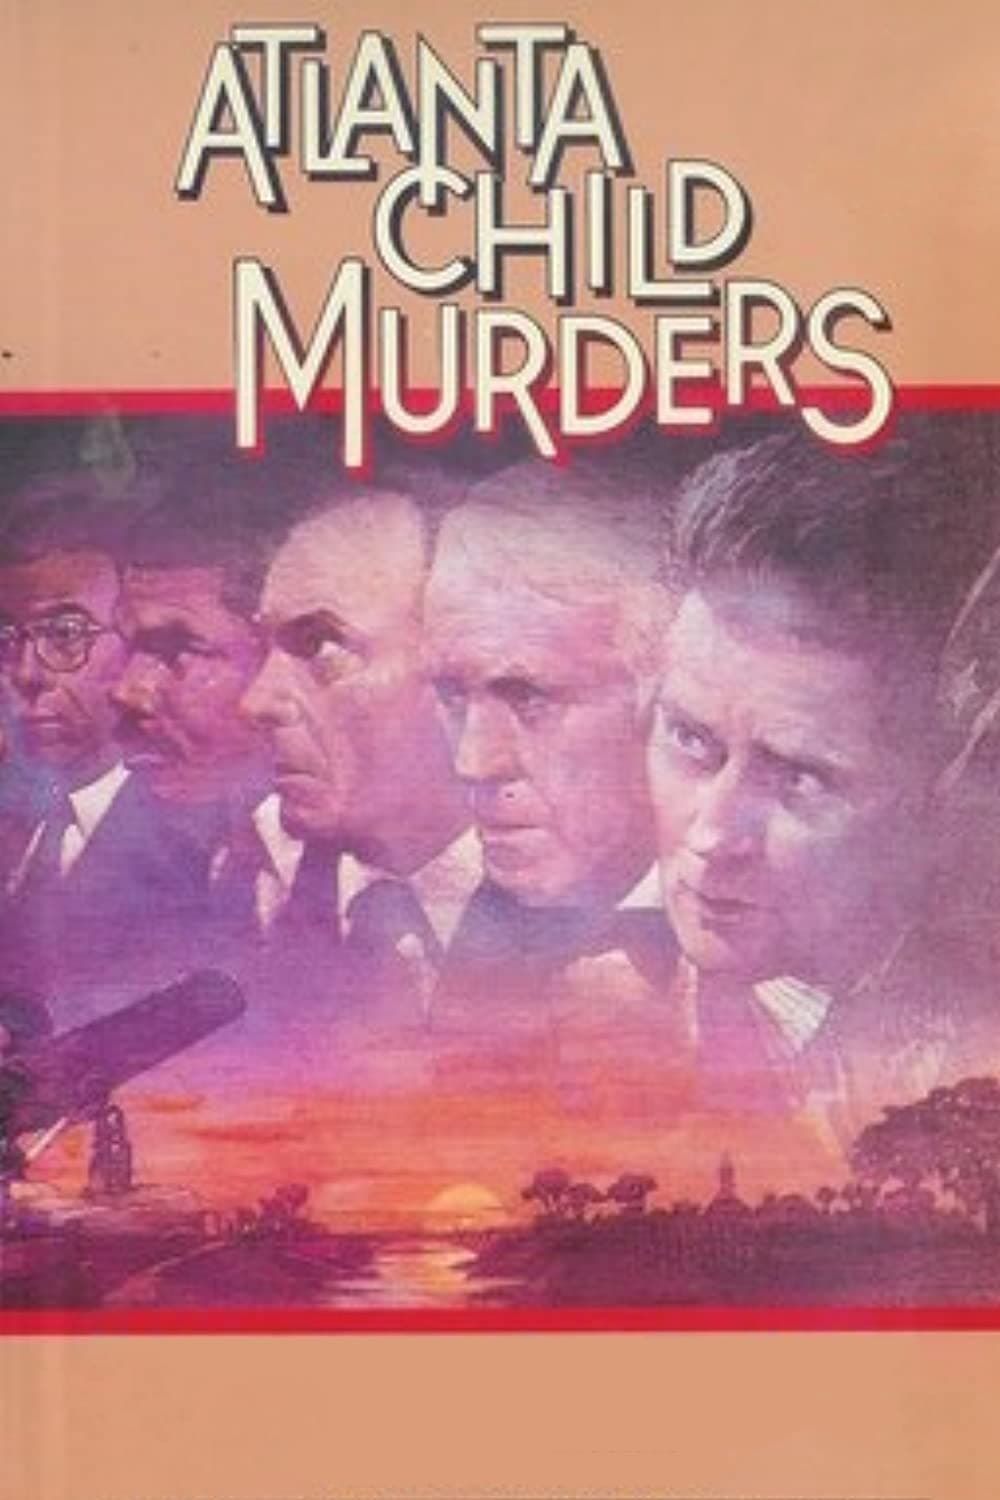 The Atlanta Child Murders (1985)